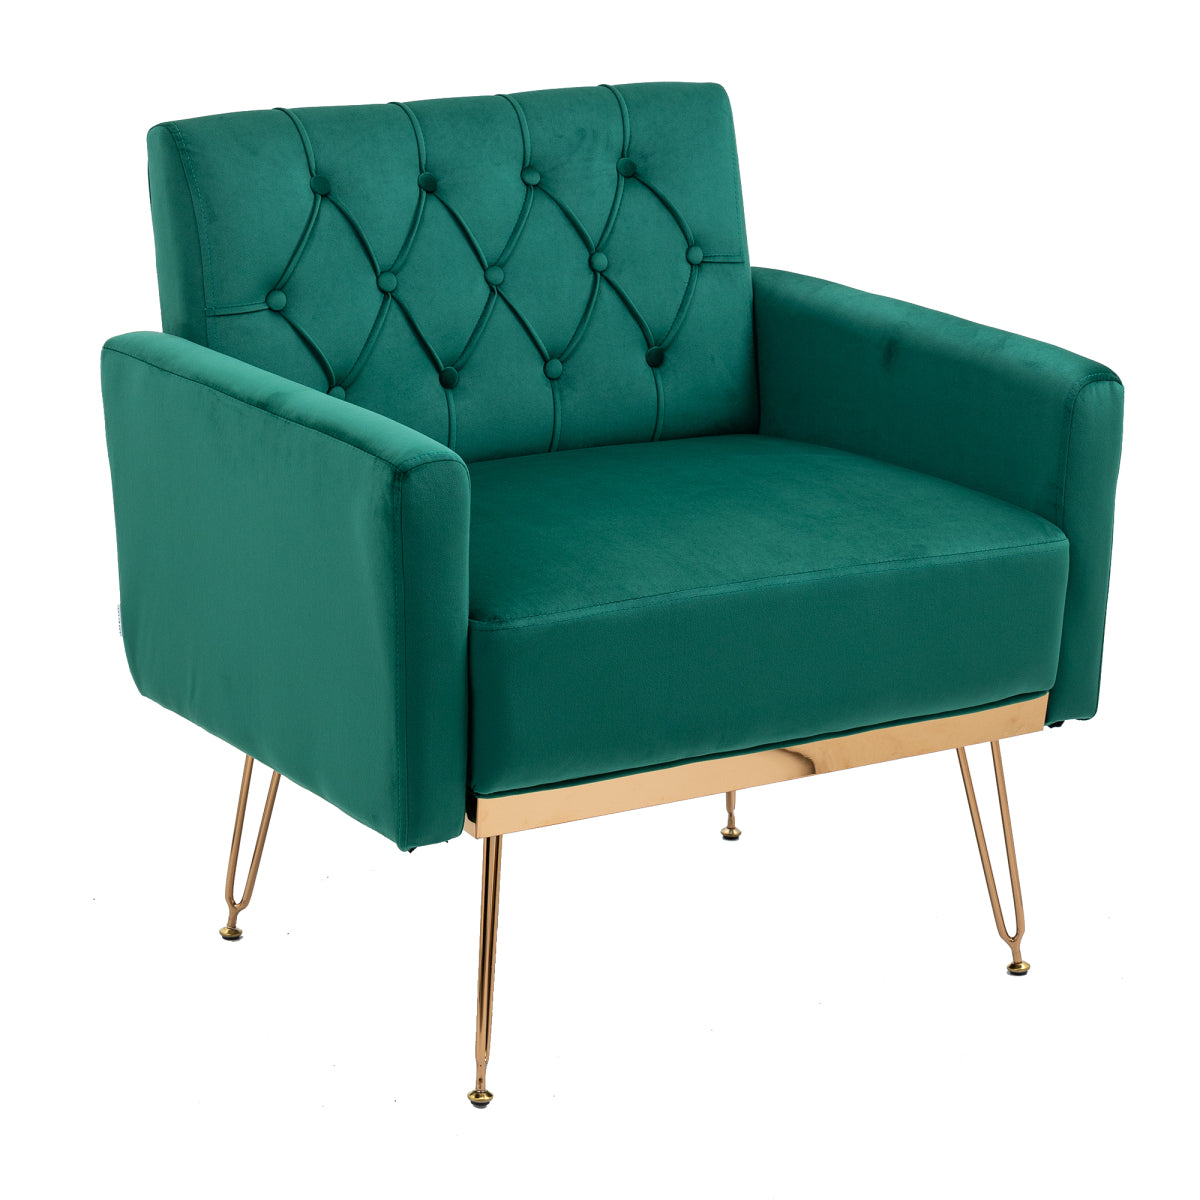 Simplie Fun Accent Chair,leisure Single Sofa With Rose Golden Feet,green